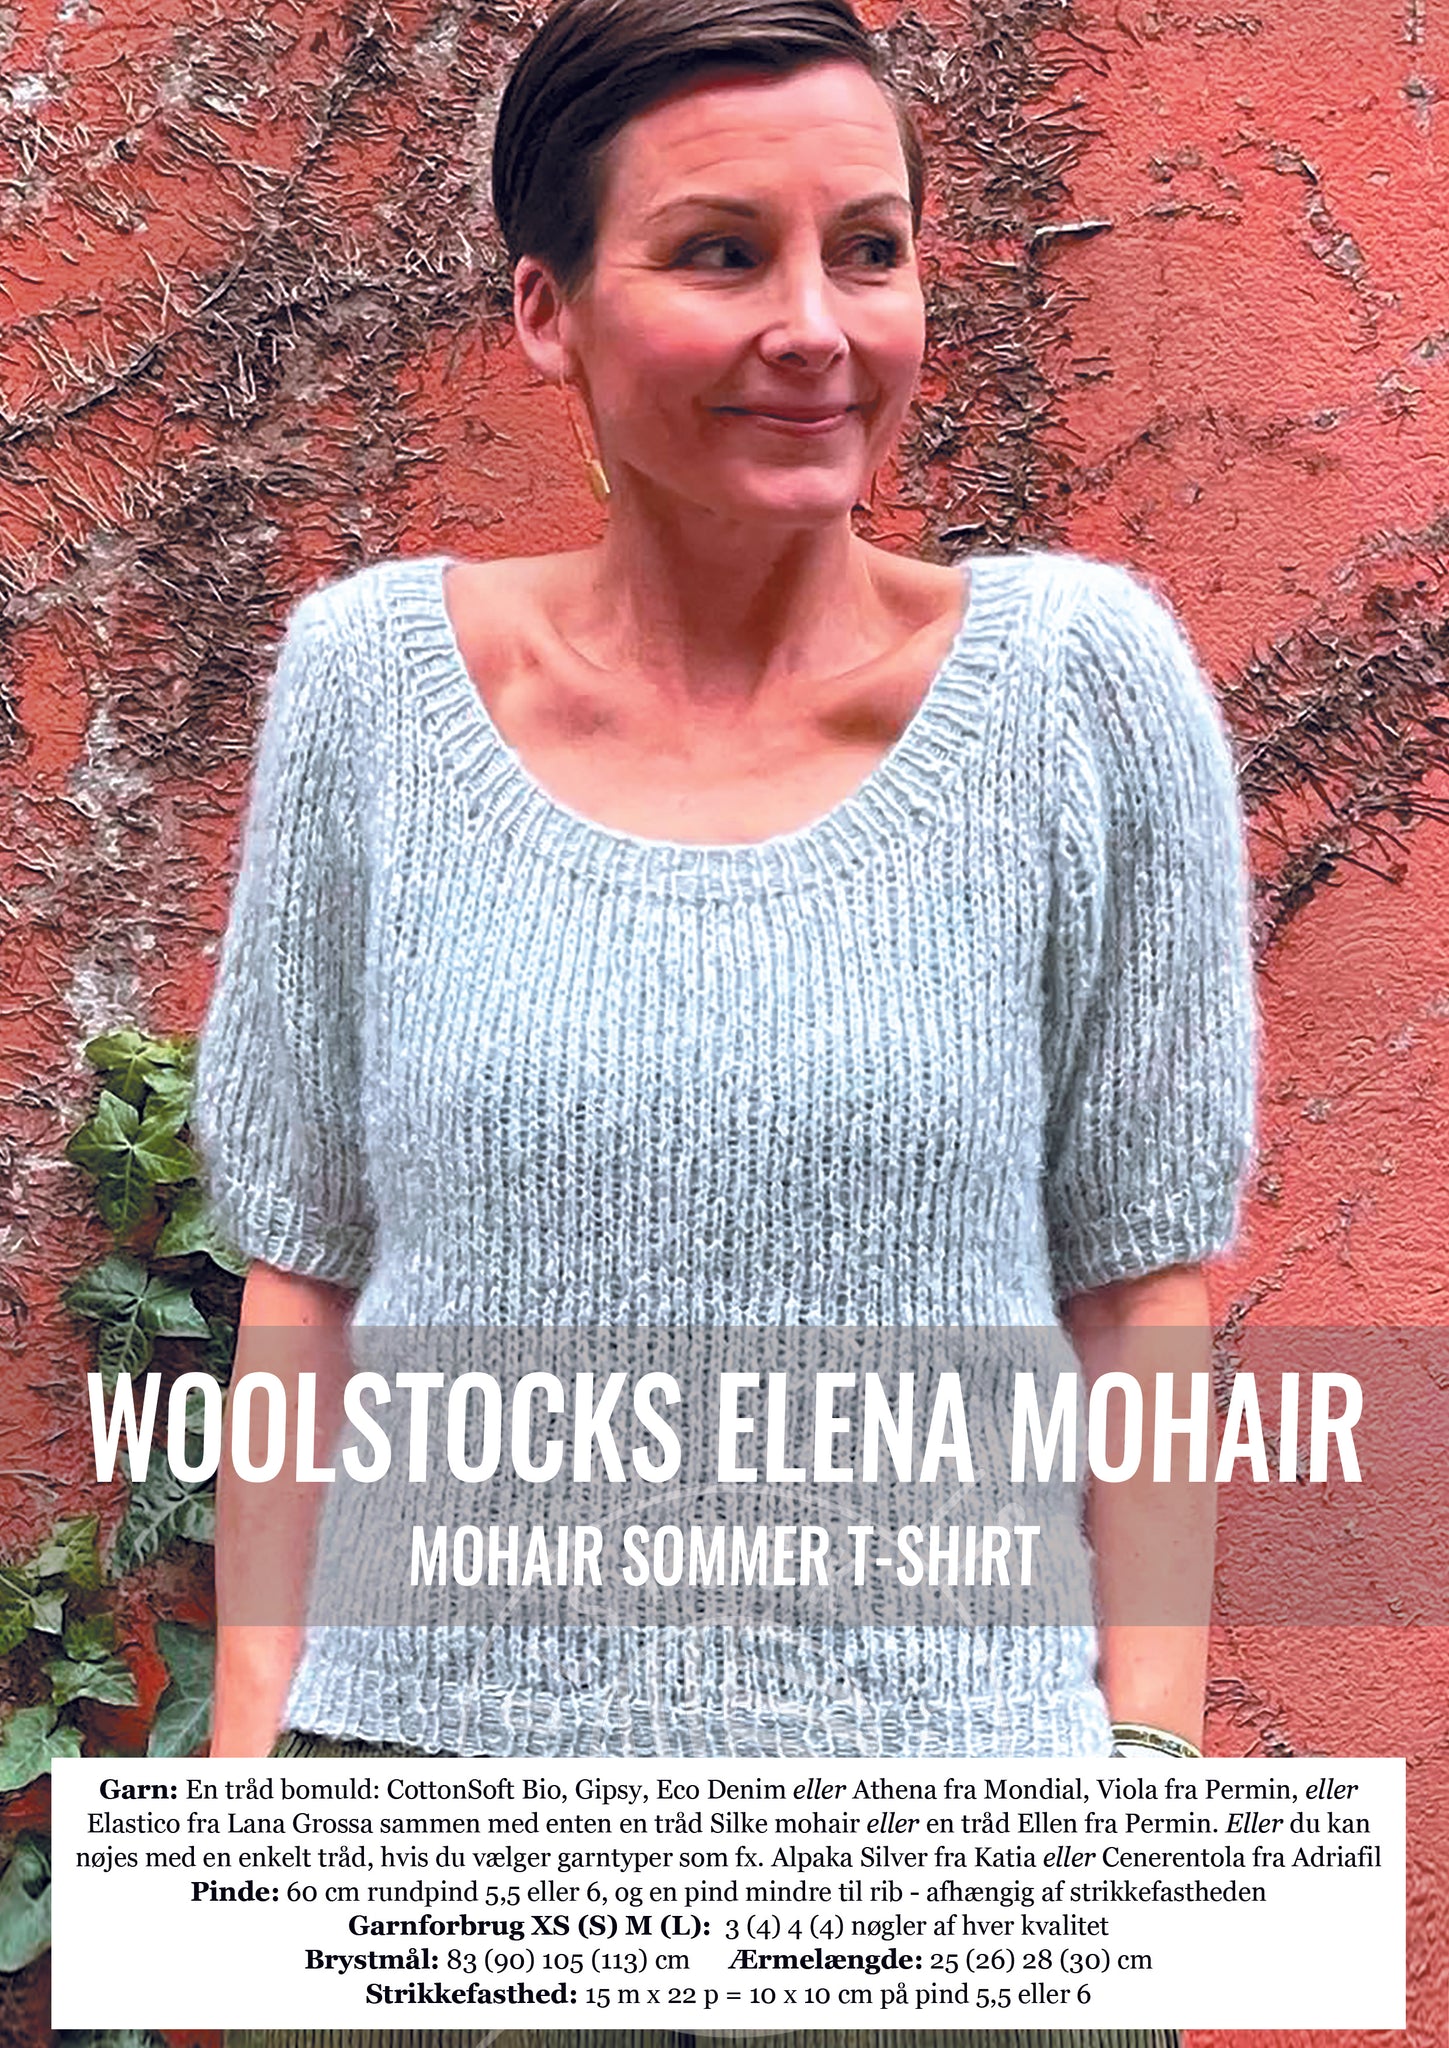 Woolstocks Elena Mohair Edition – Woolstock cotton, wool